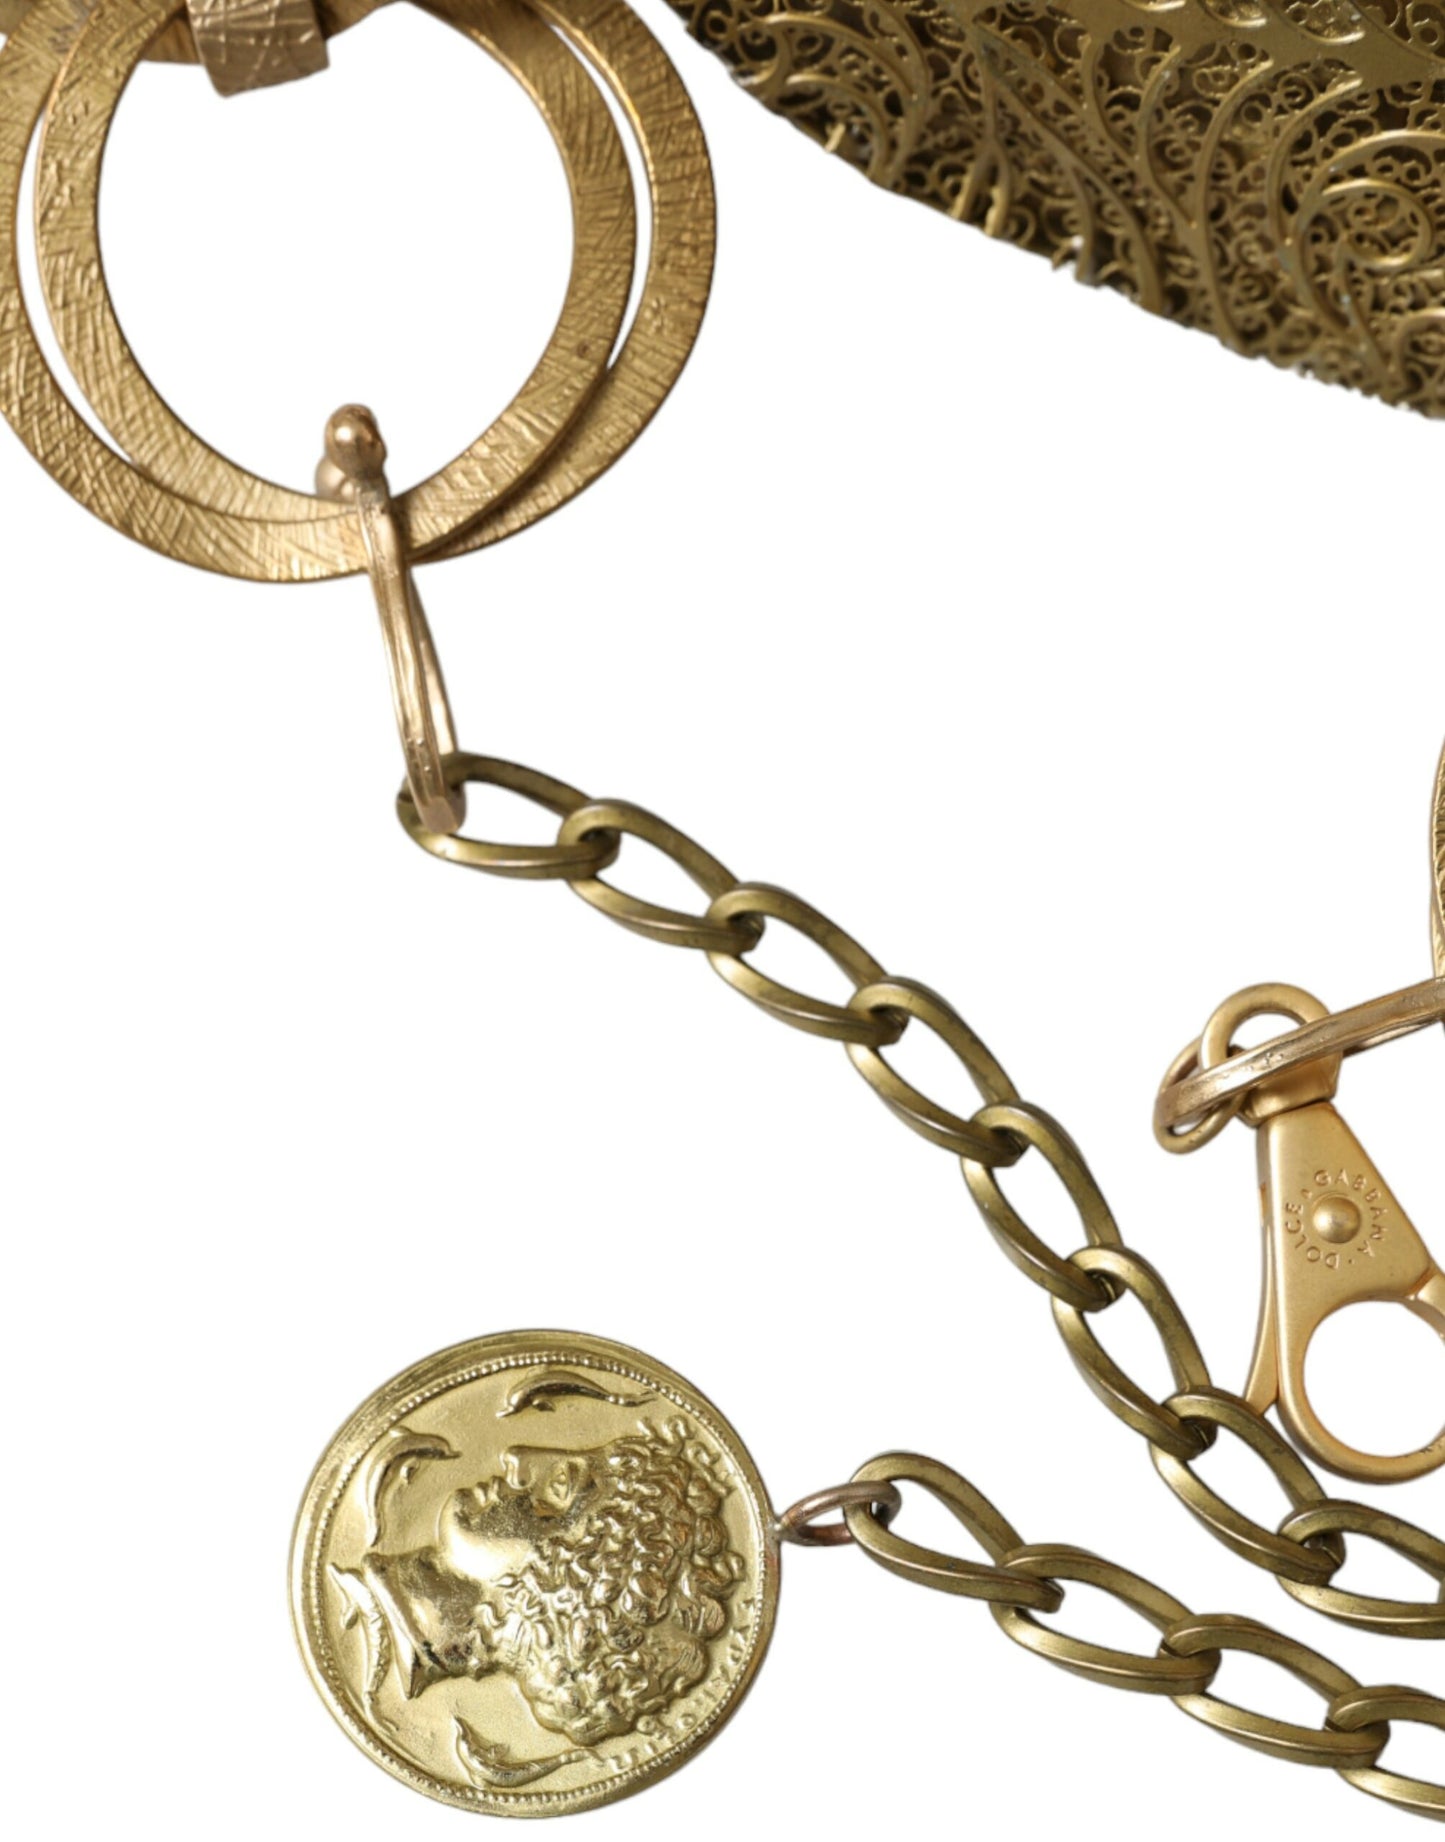 Elegant Gold Tone Coin Waist Belt